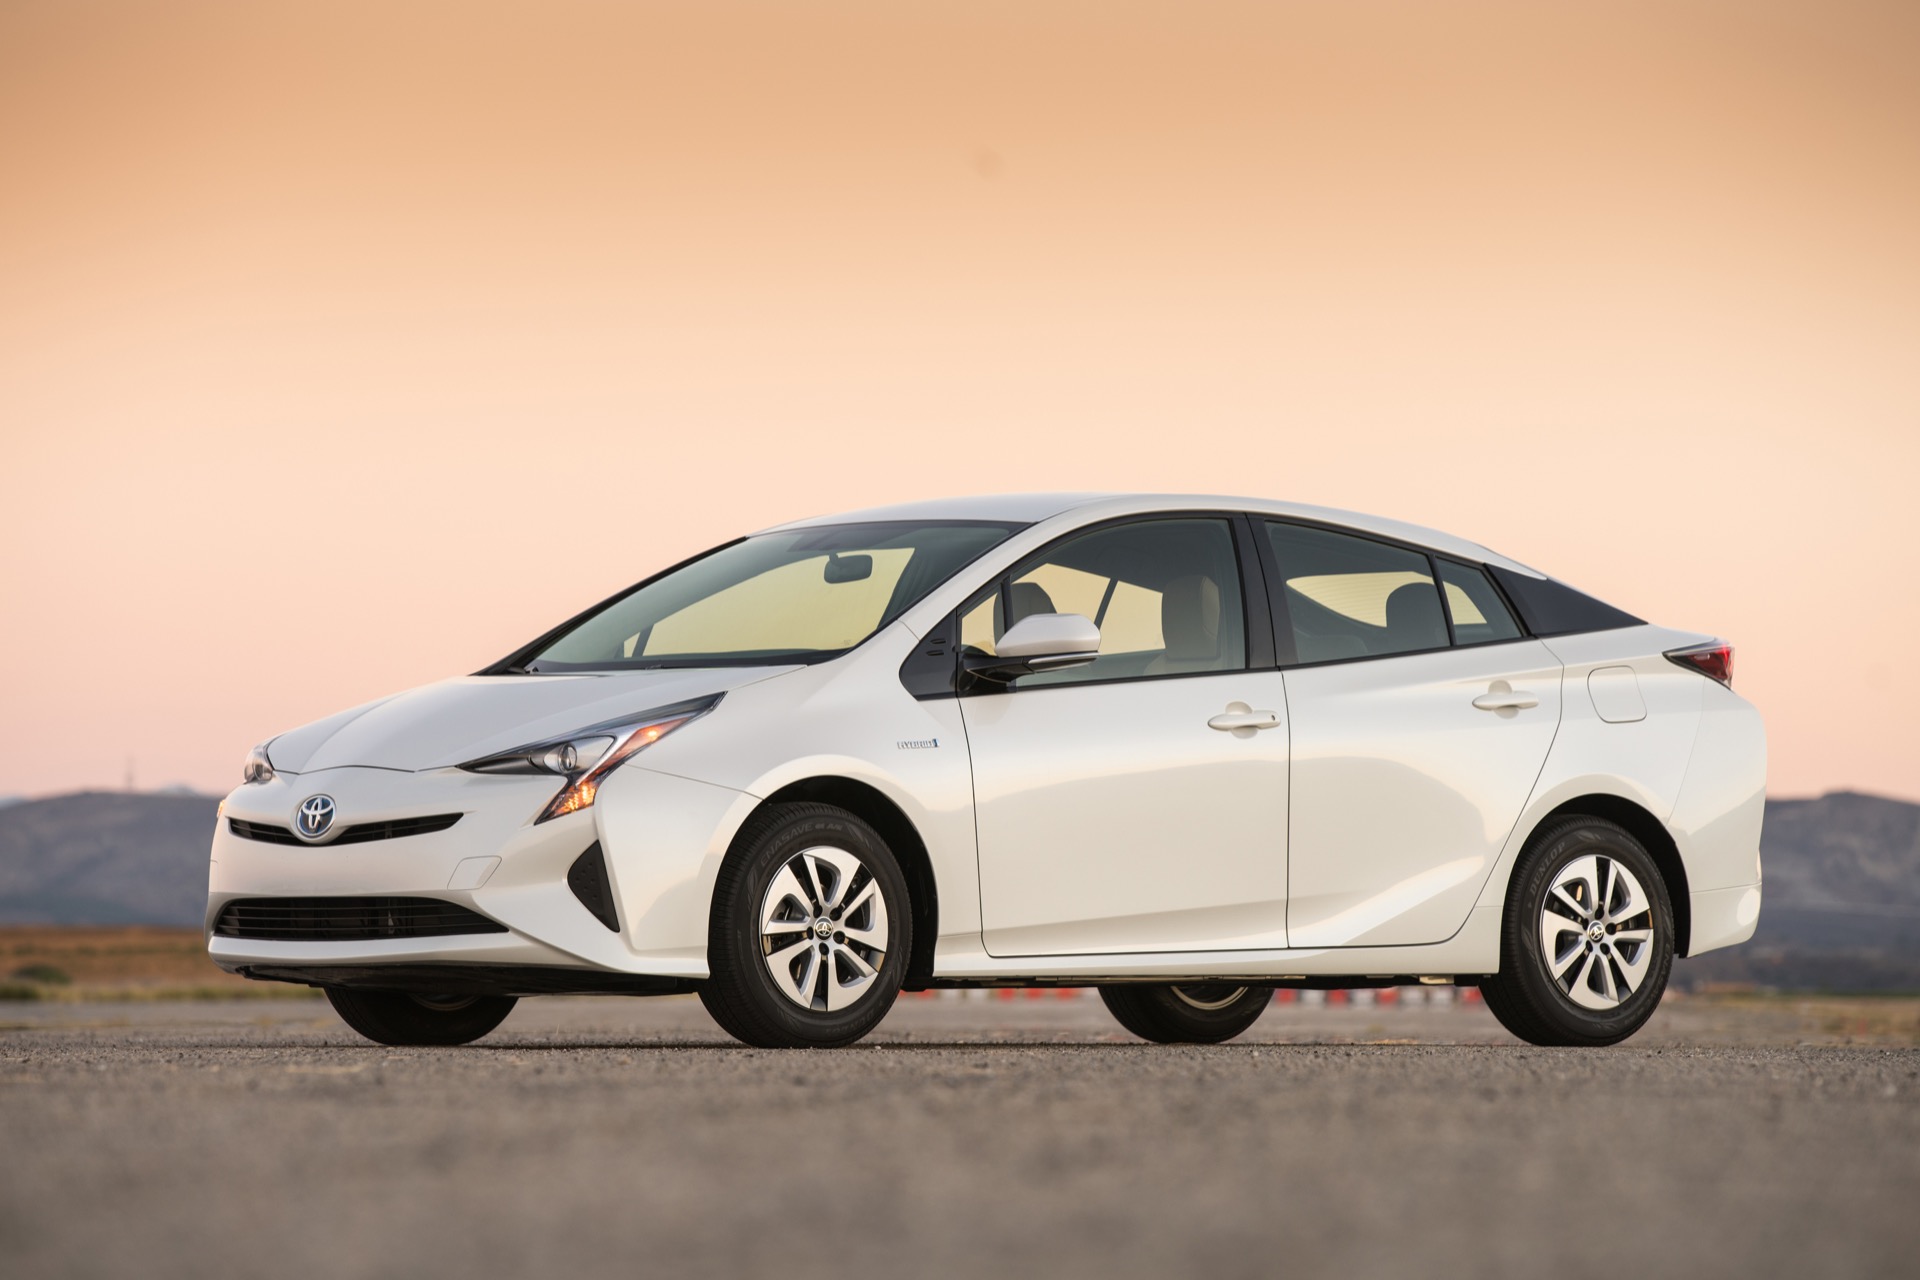 Toyota Prius: The First Toyota Hybrid Car